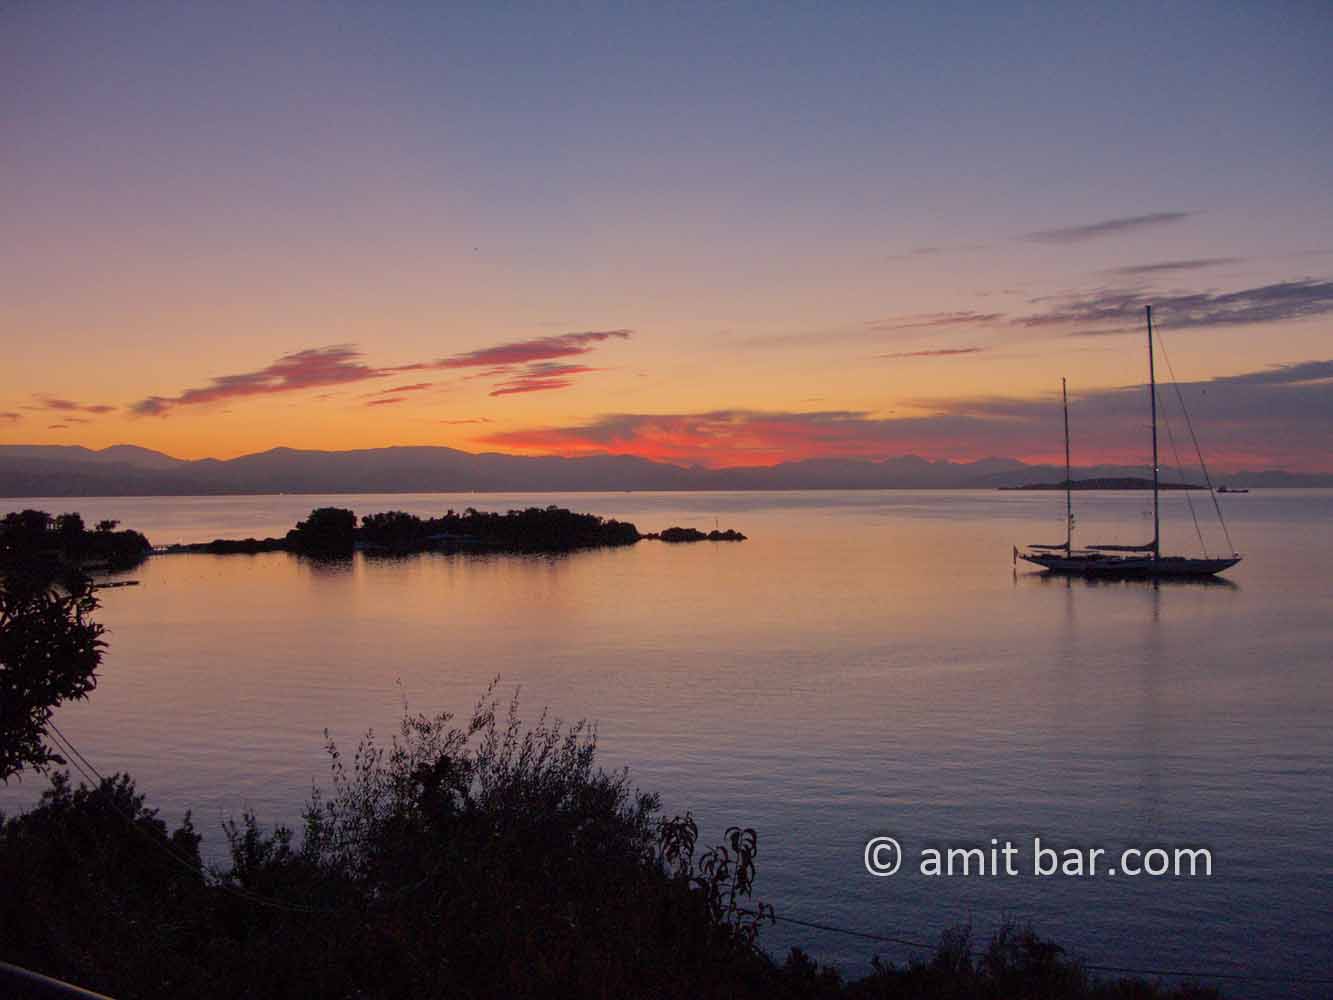 Corfu: Sunrise above Greece I: Sunrise above Greece